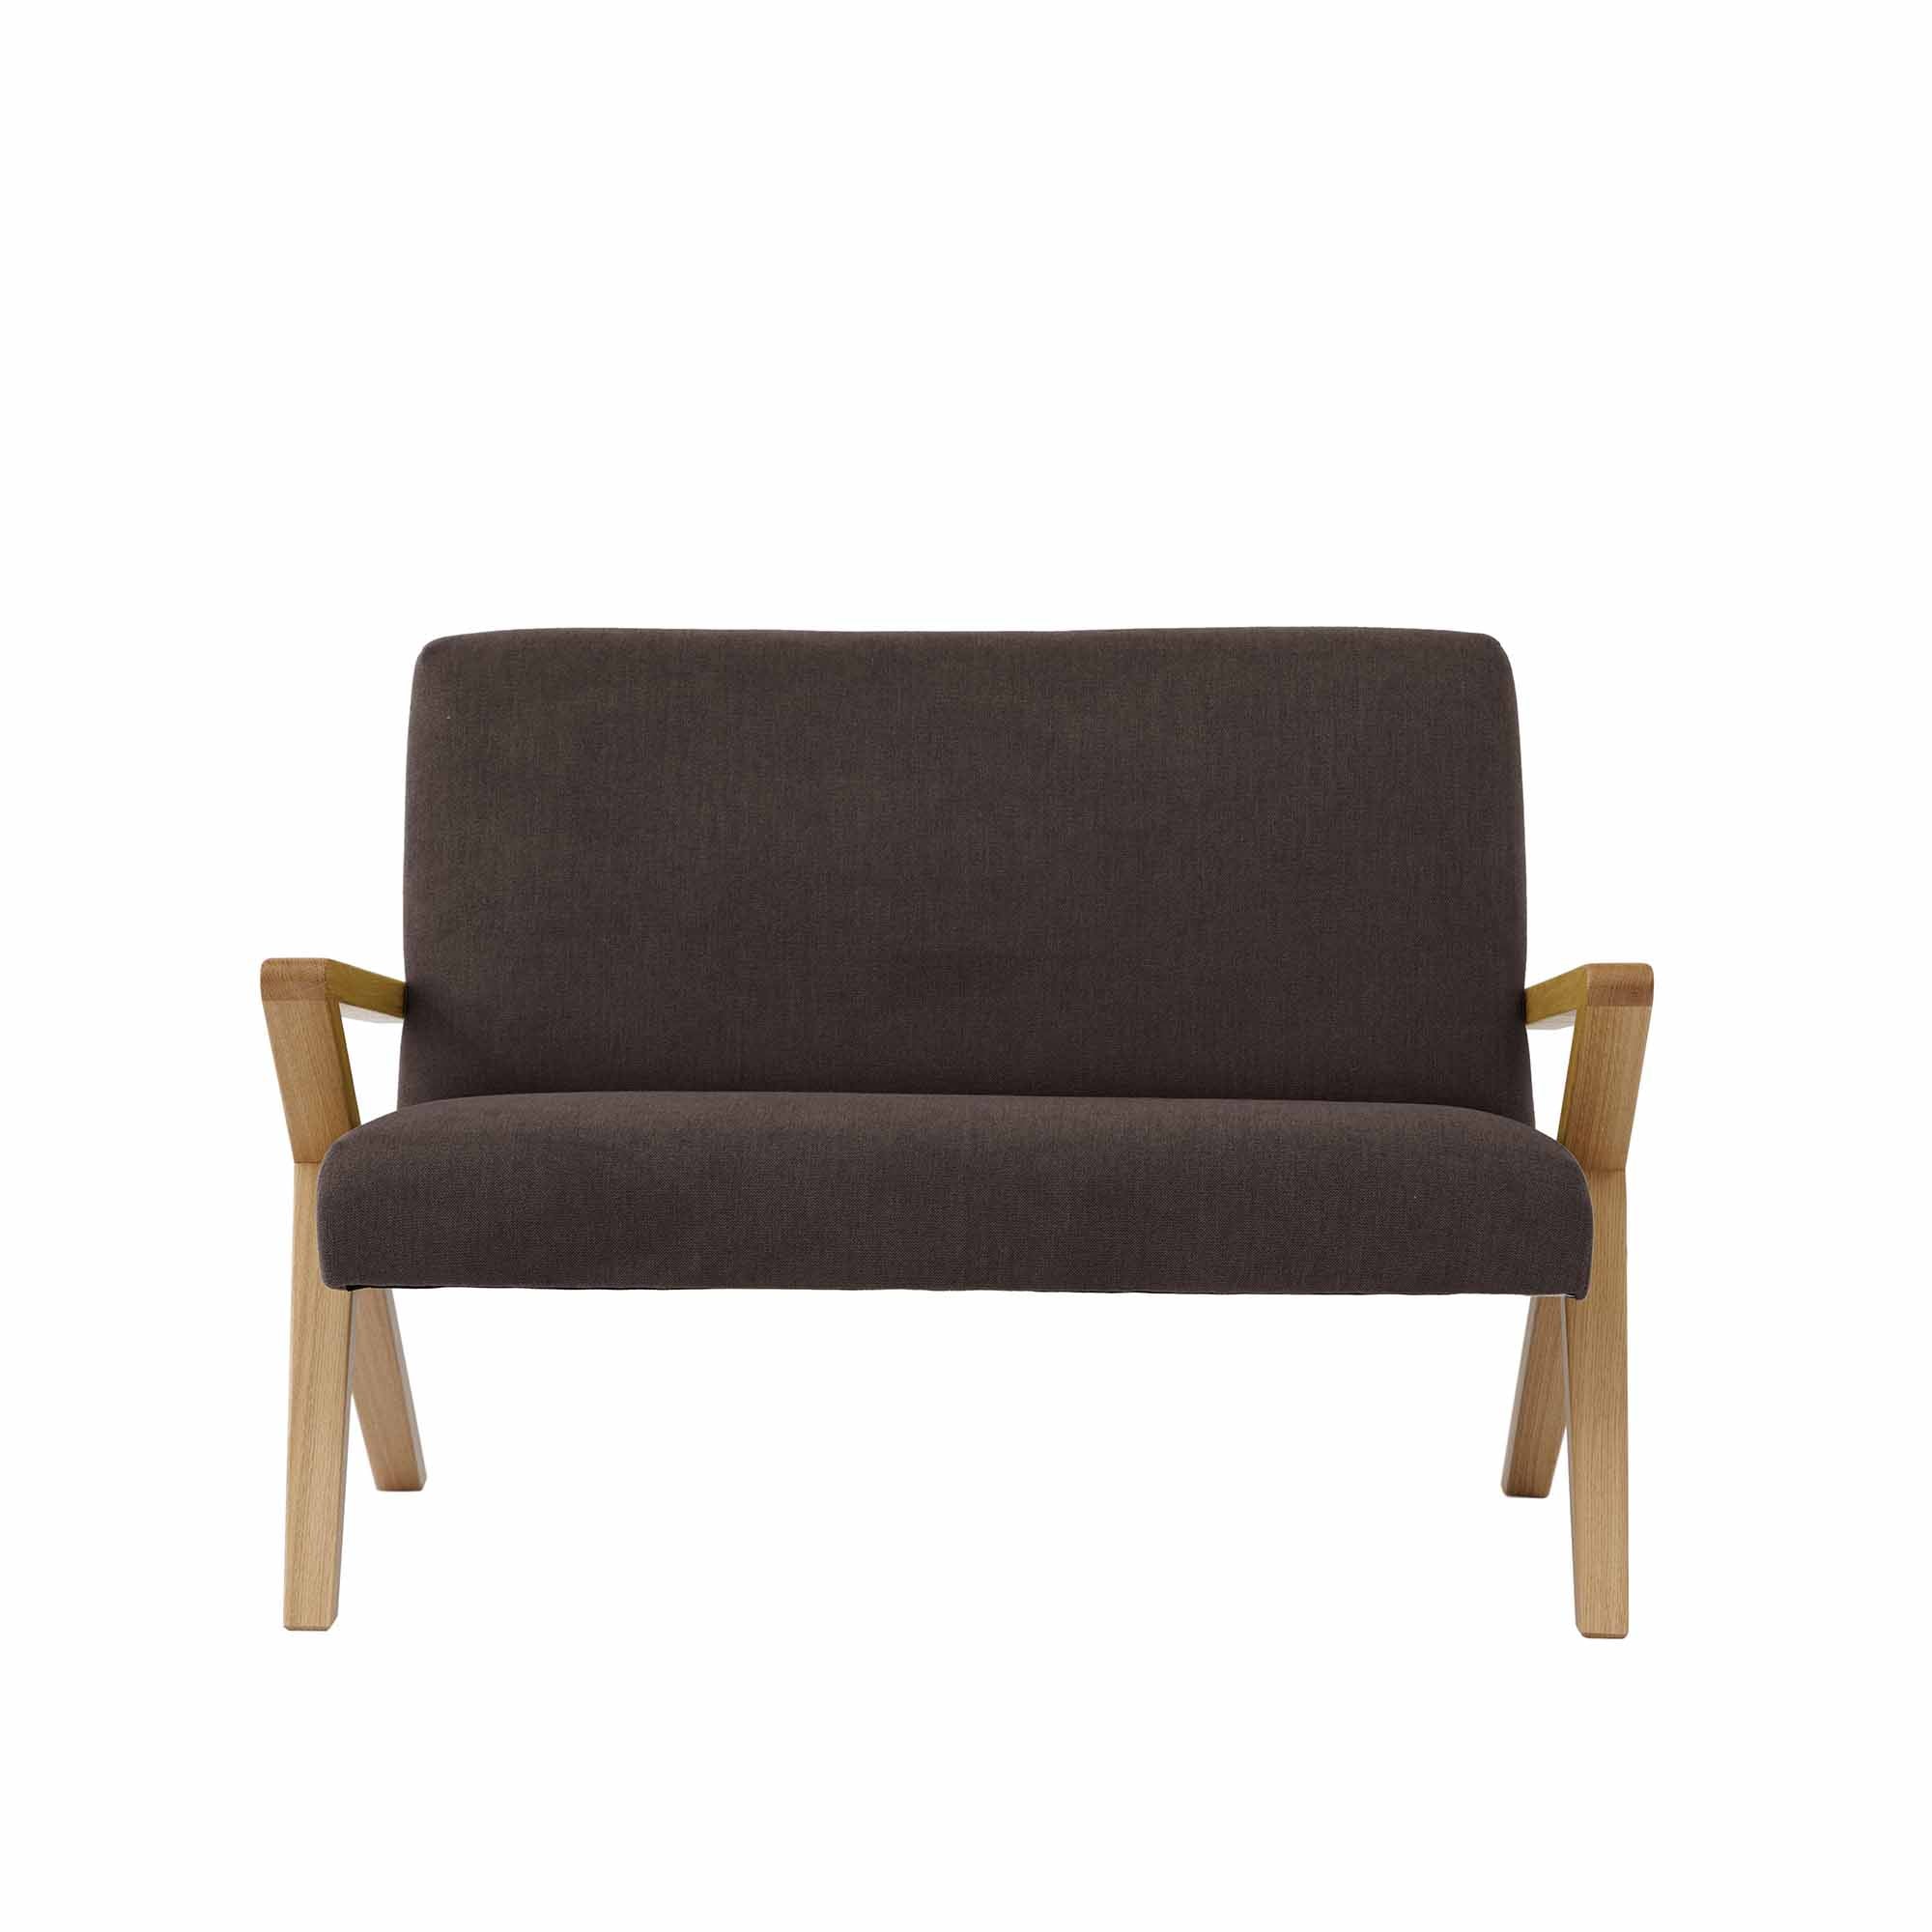 KIDS RETROSTAR 2-Seater Sofa, Oak Wood Frame, Natural brown fabric, front view